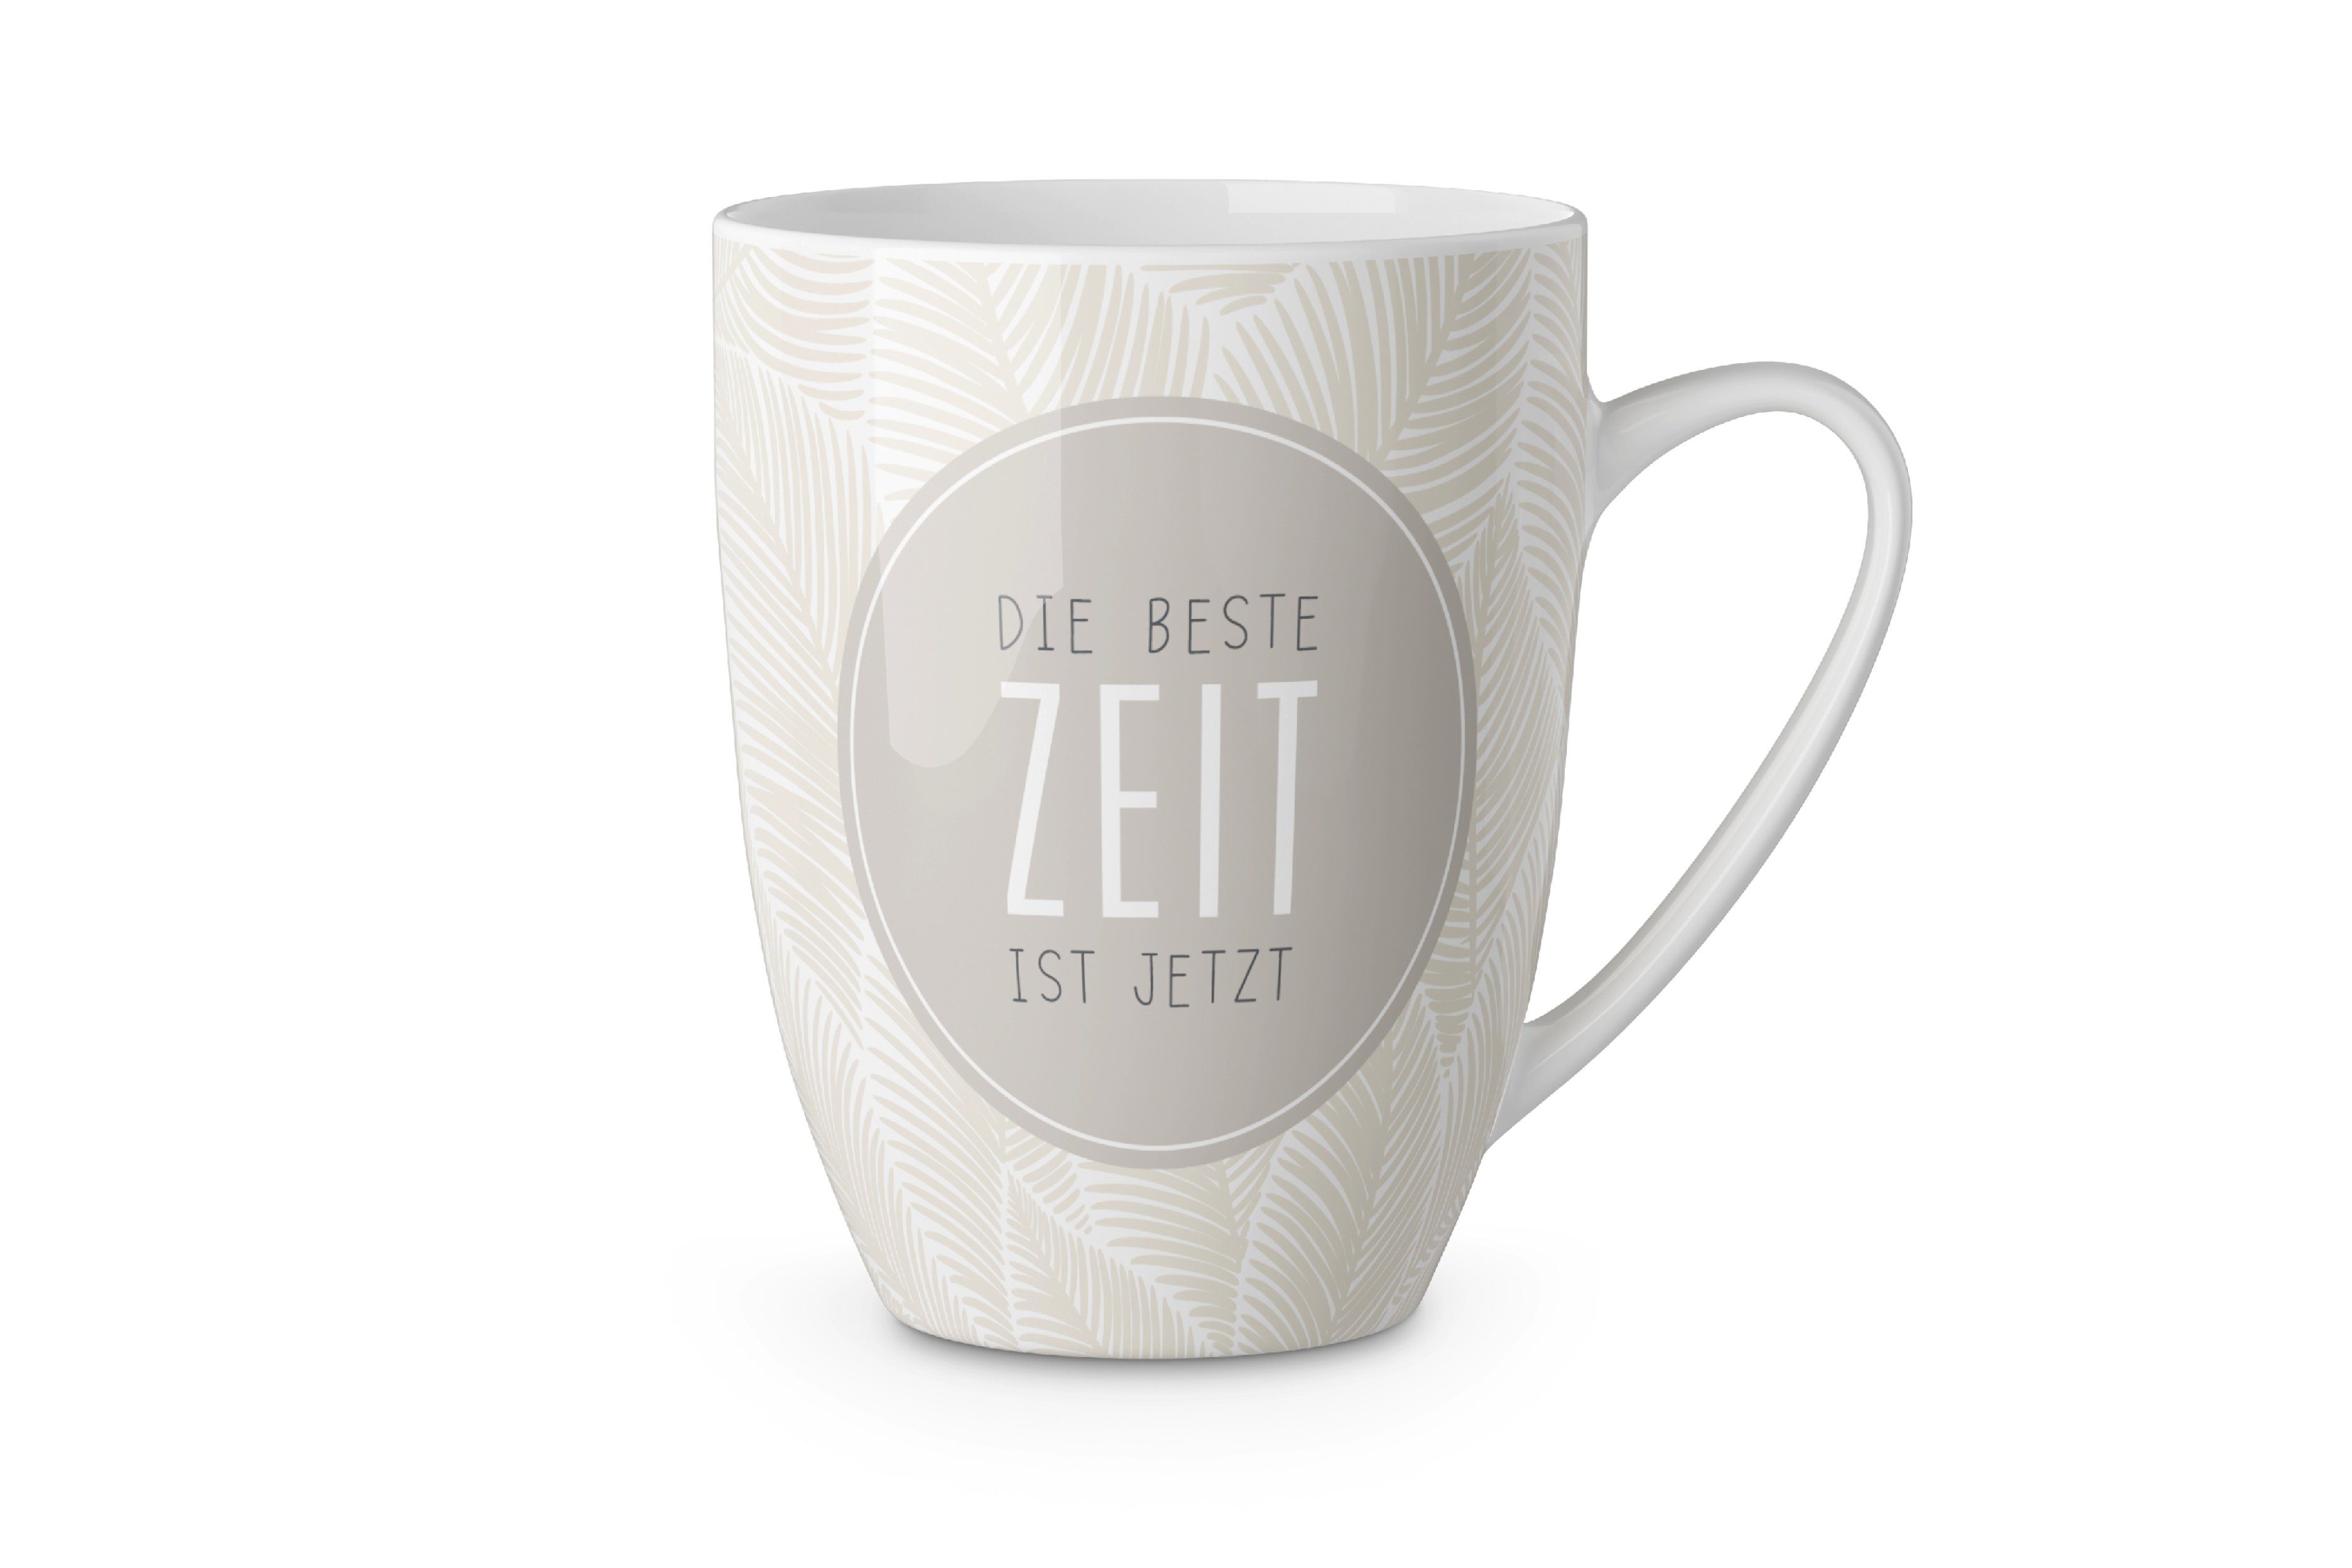 Feder Kaffeebecher 950391 250ml Material: La Tasse la vida, Keramik Kaffeetasse dich Vida für Becher Tasse Tee